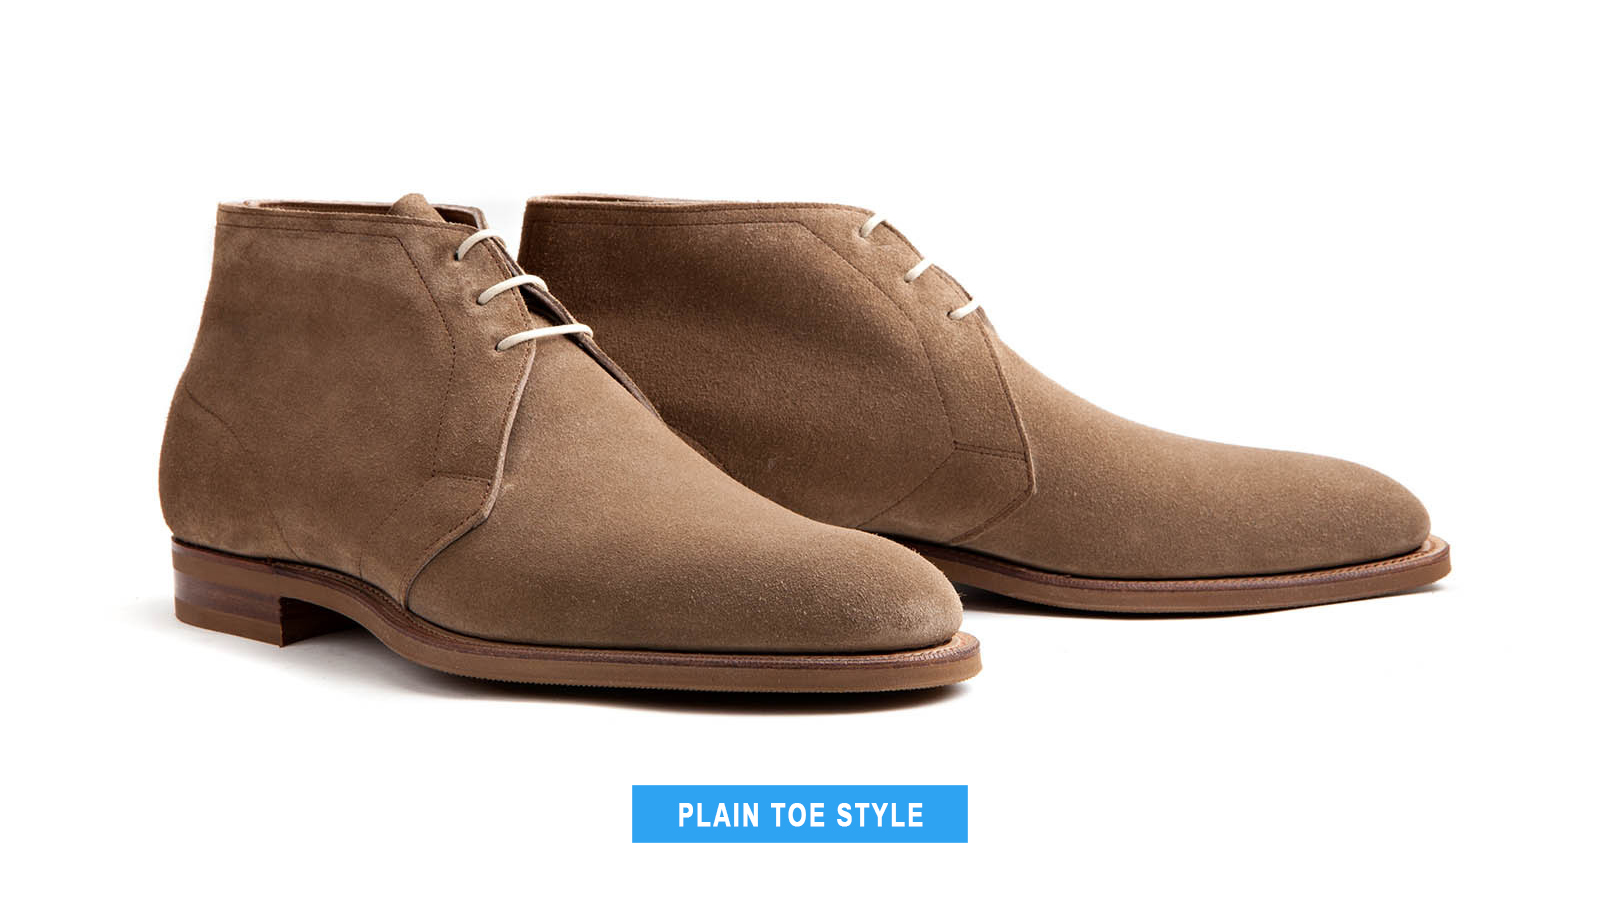 plain toe boots style